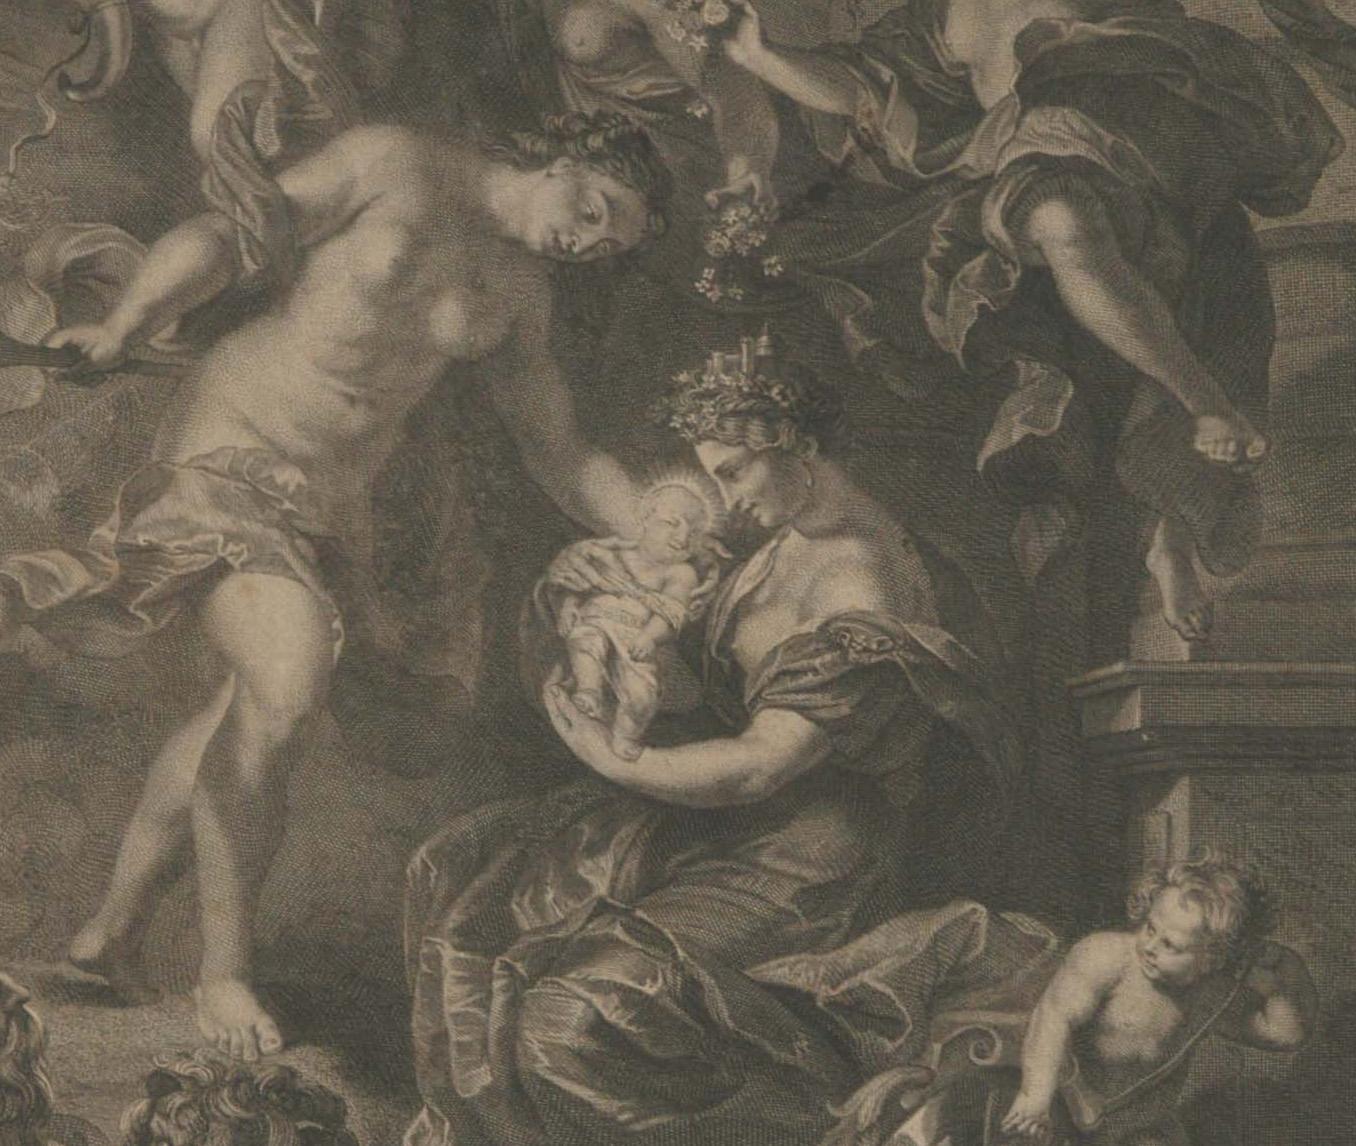 Baroque Peter Paul Rubens 